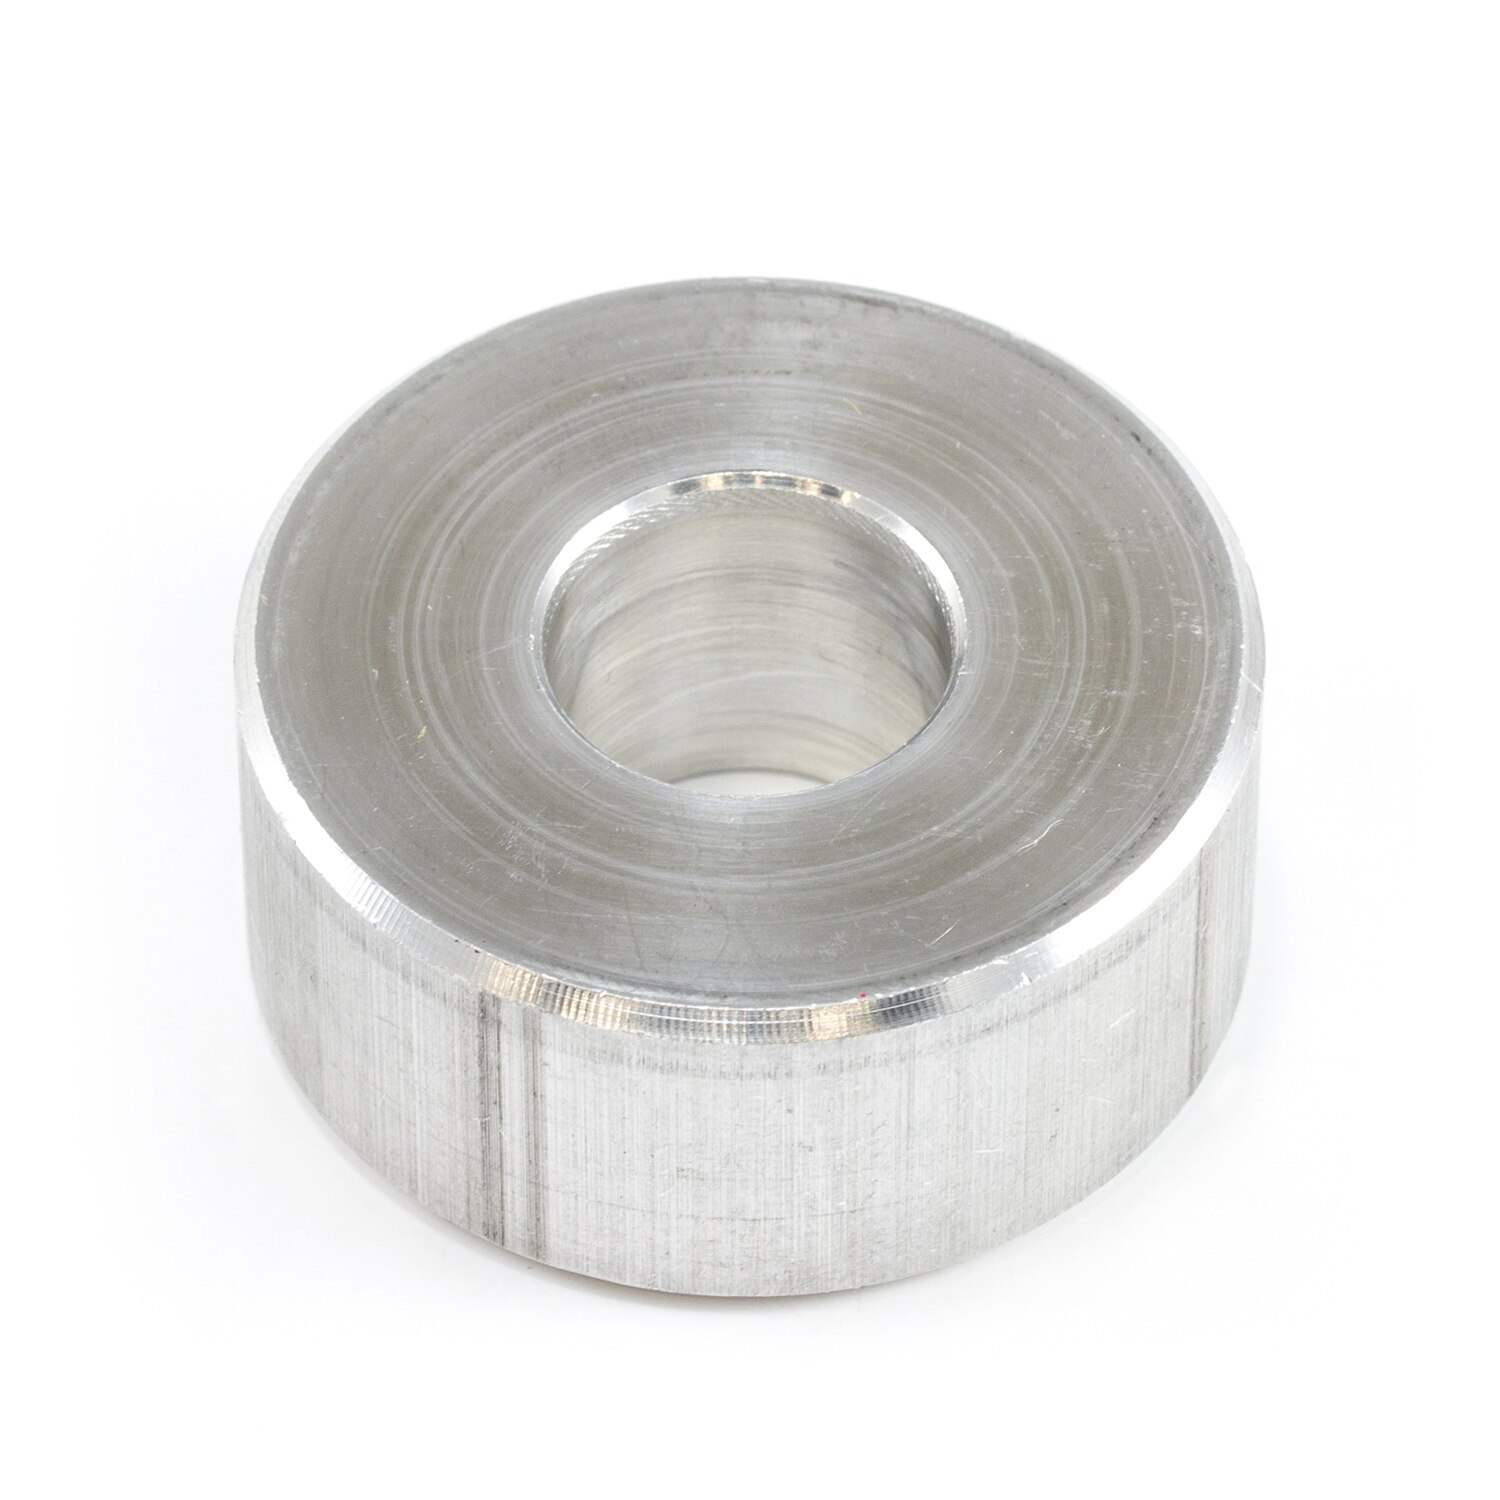 Aluminum Washer / Spacer 1.75 Diameter x 0.50 Thick 10-pk